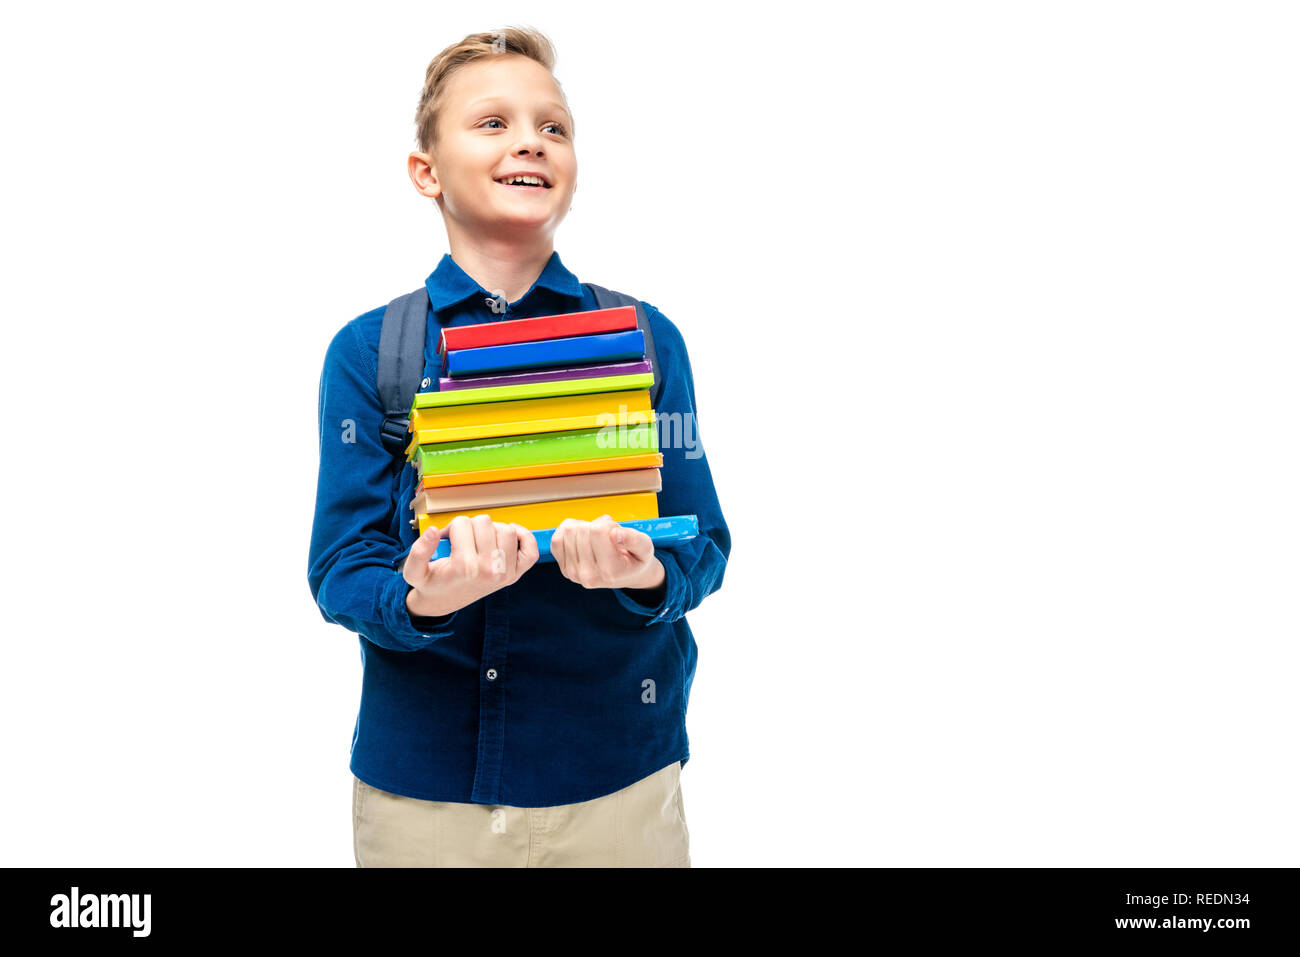 smiling boy holding stack of books isolated on white Stock Photo